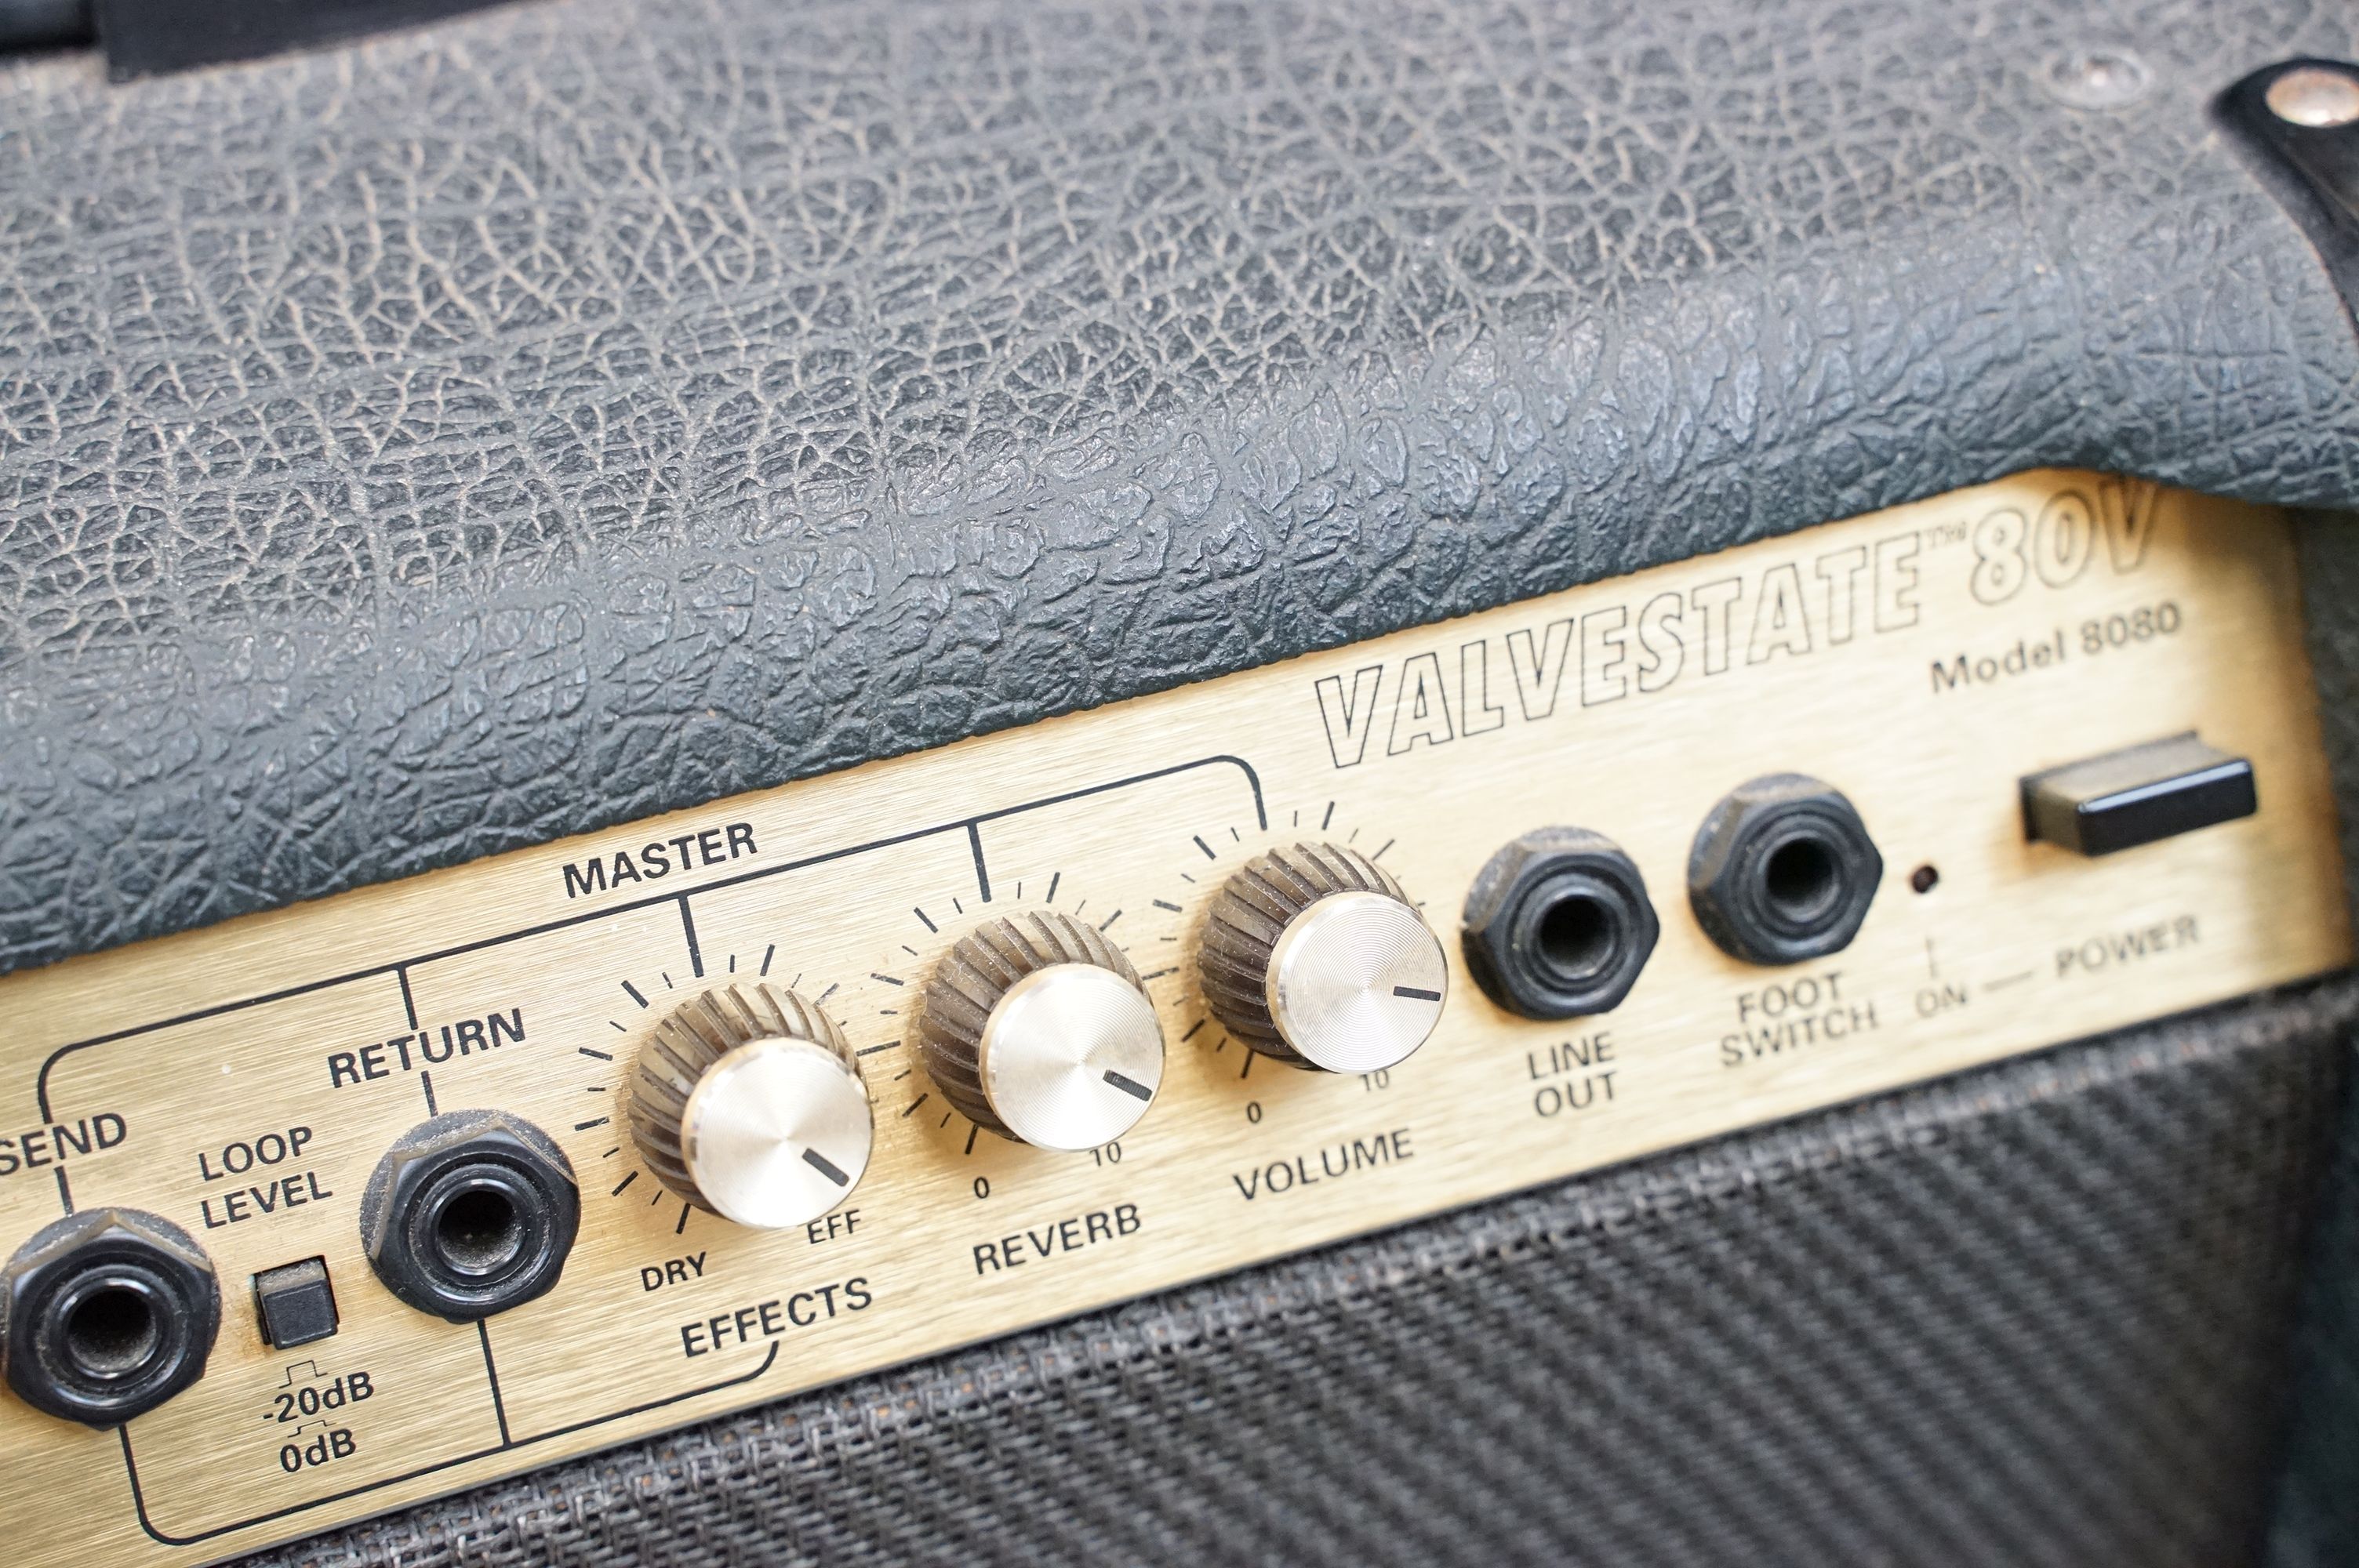 Marshall Valvestate 8080 combo guitar amplifier - Image 4 of 10